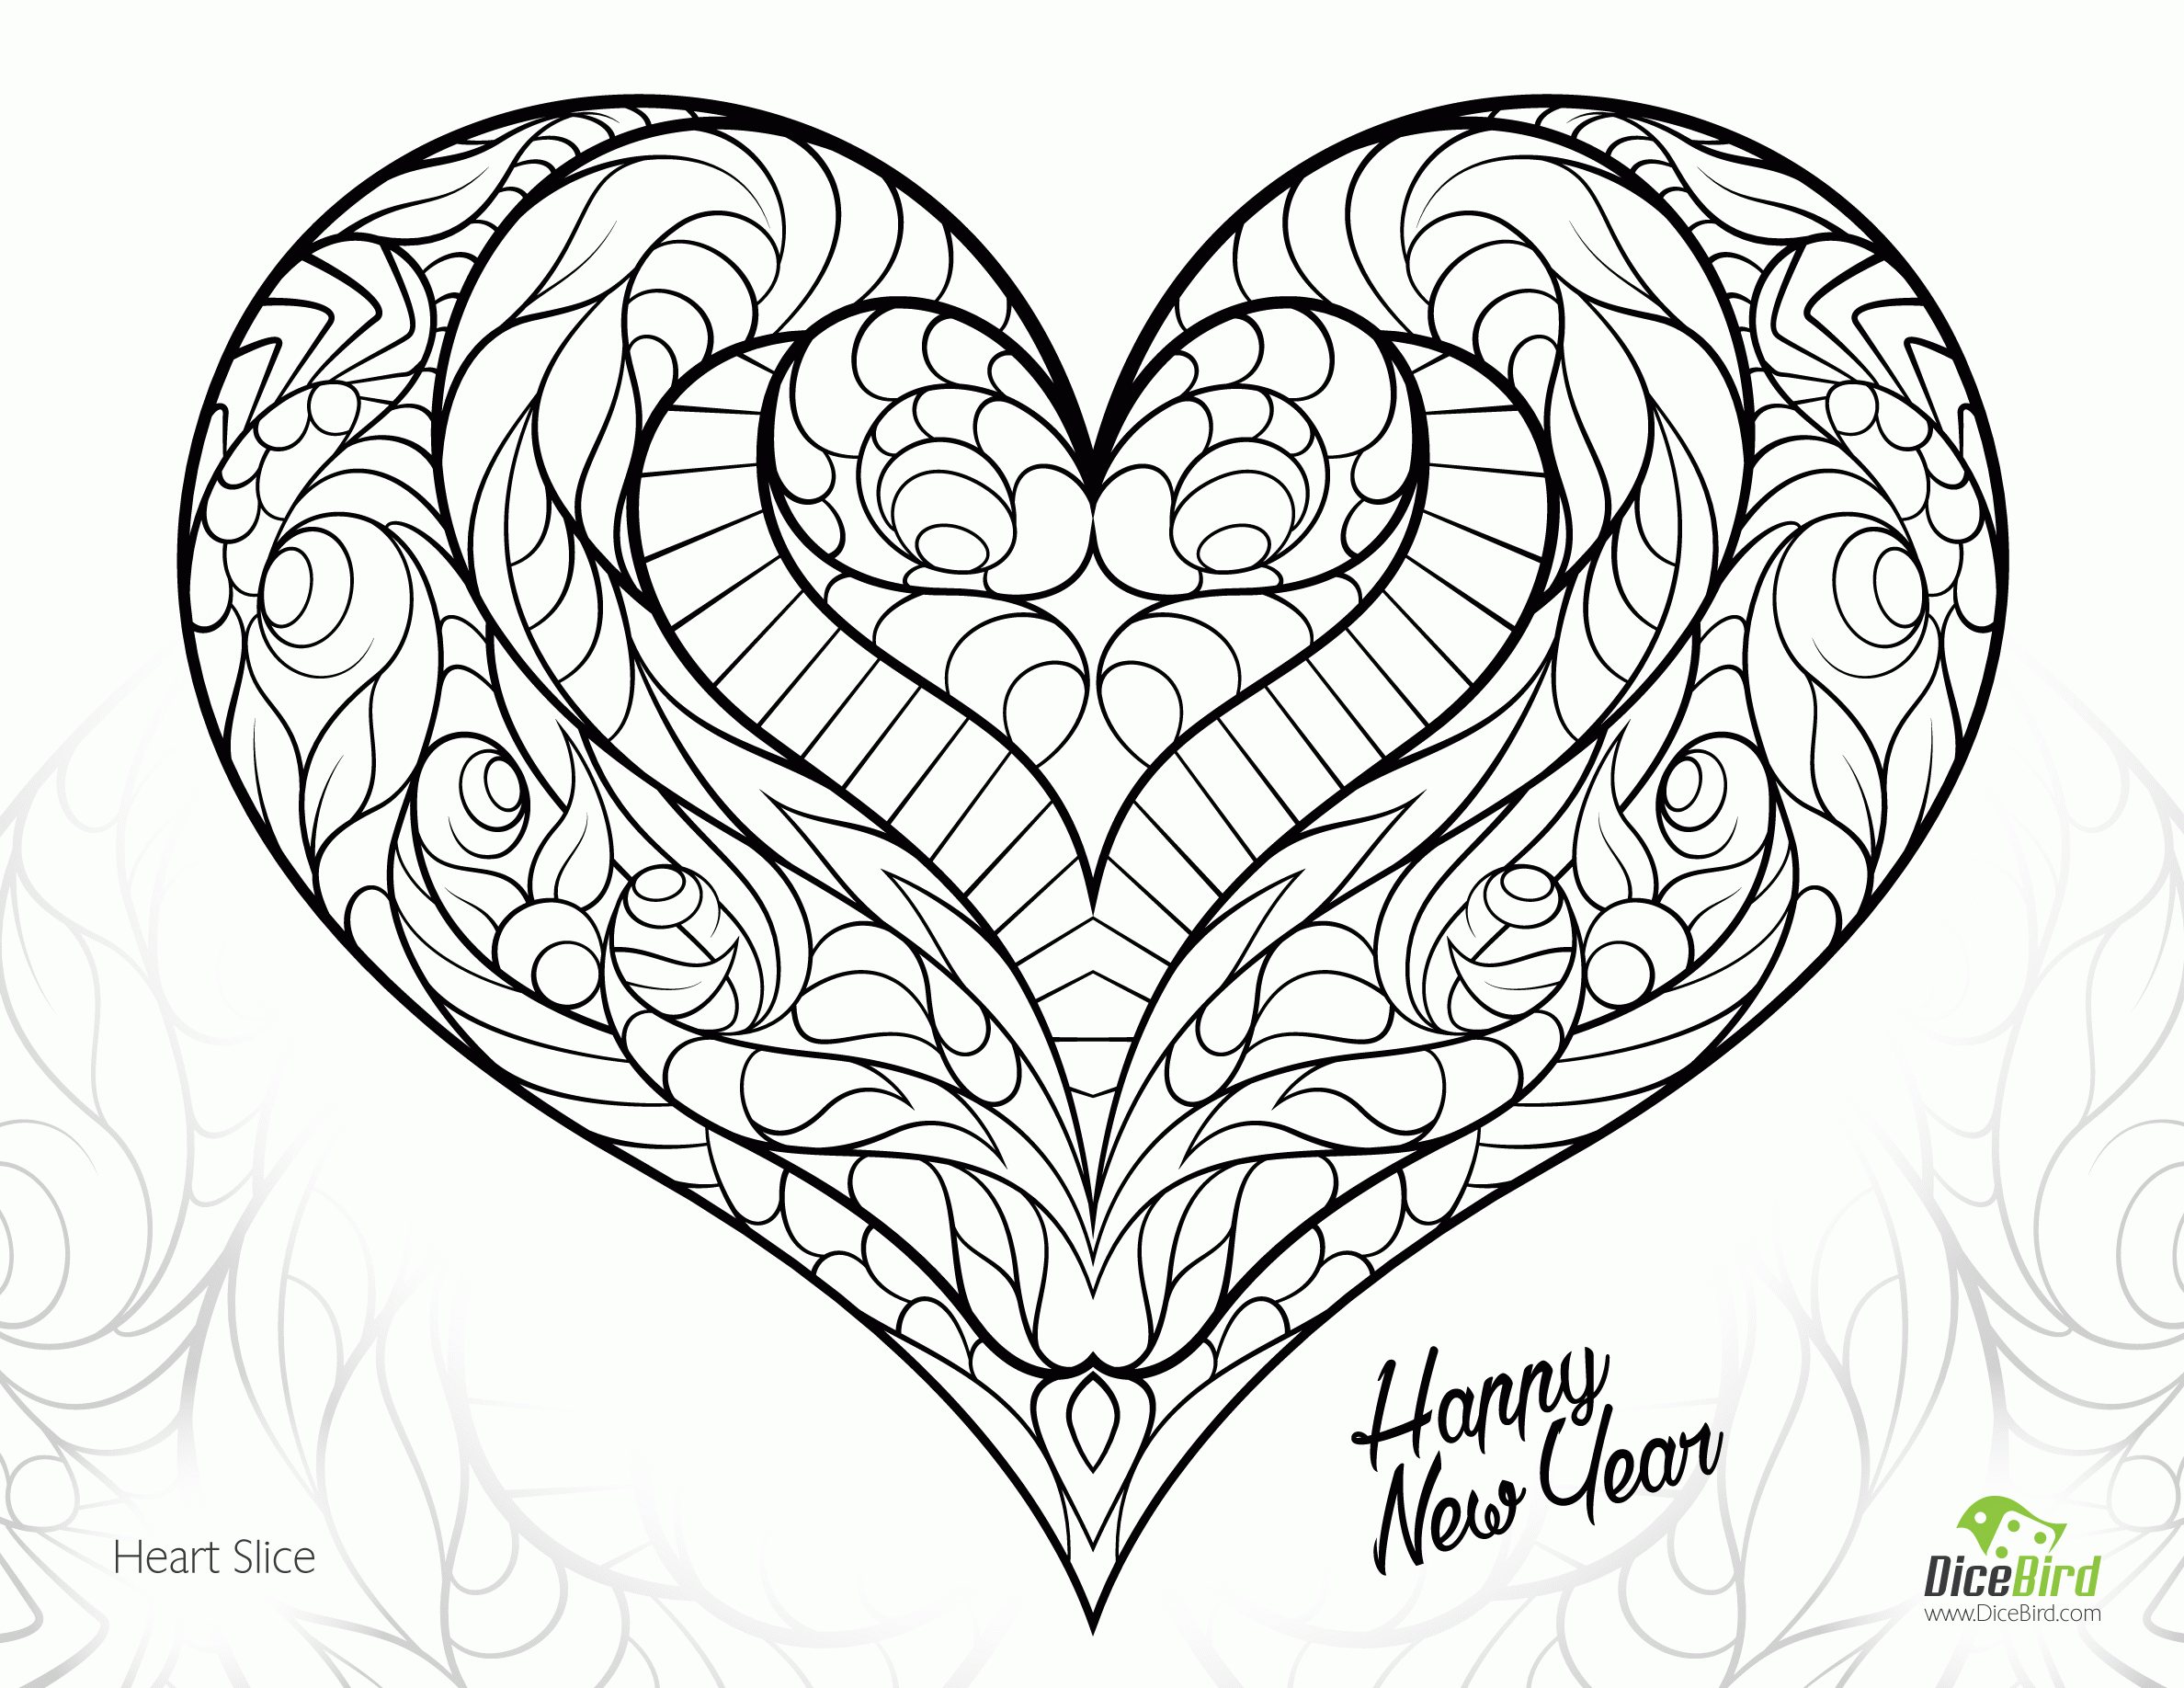 Gambar Coloring Pages Heart Slice Free Adult Printable Hard Crayola di ...